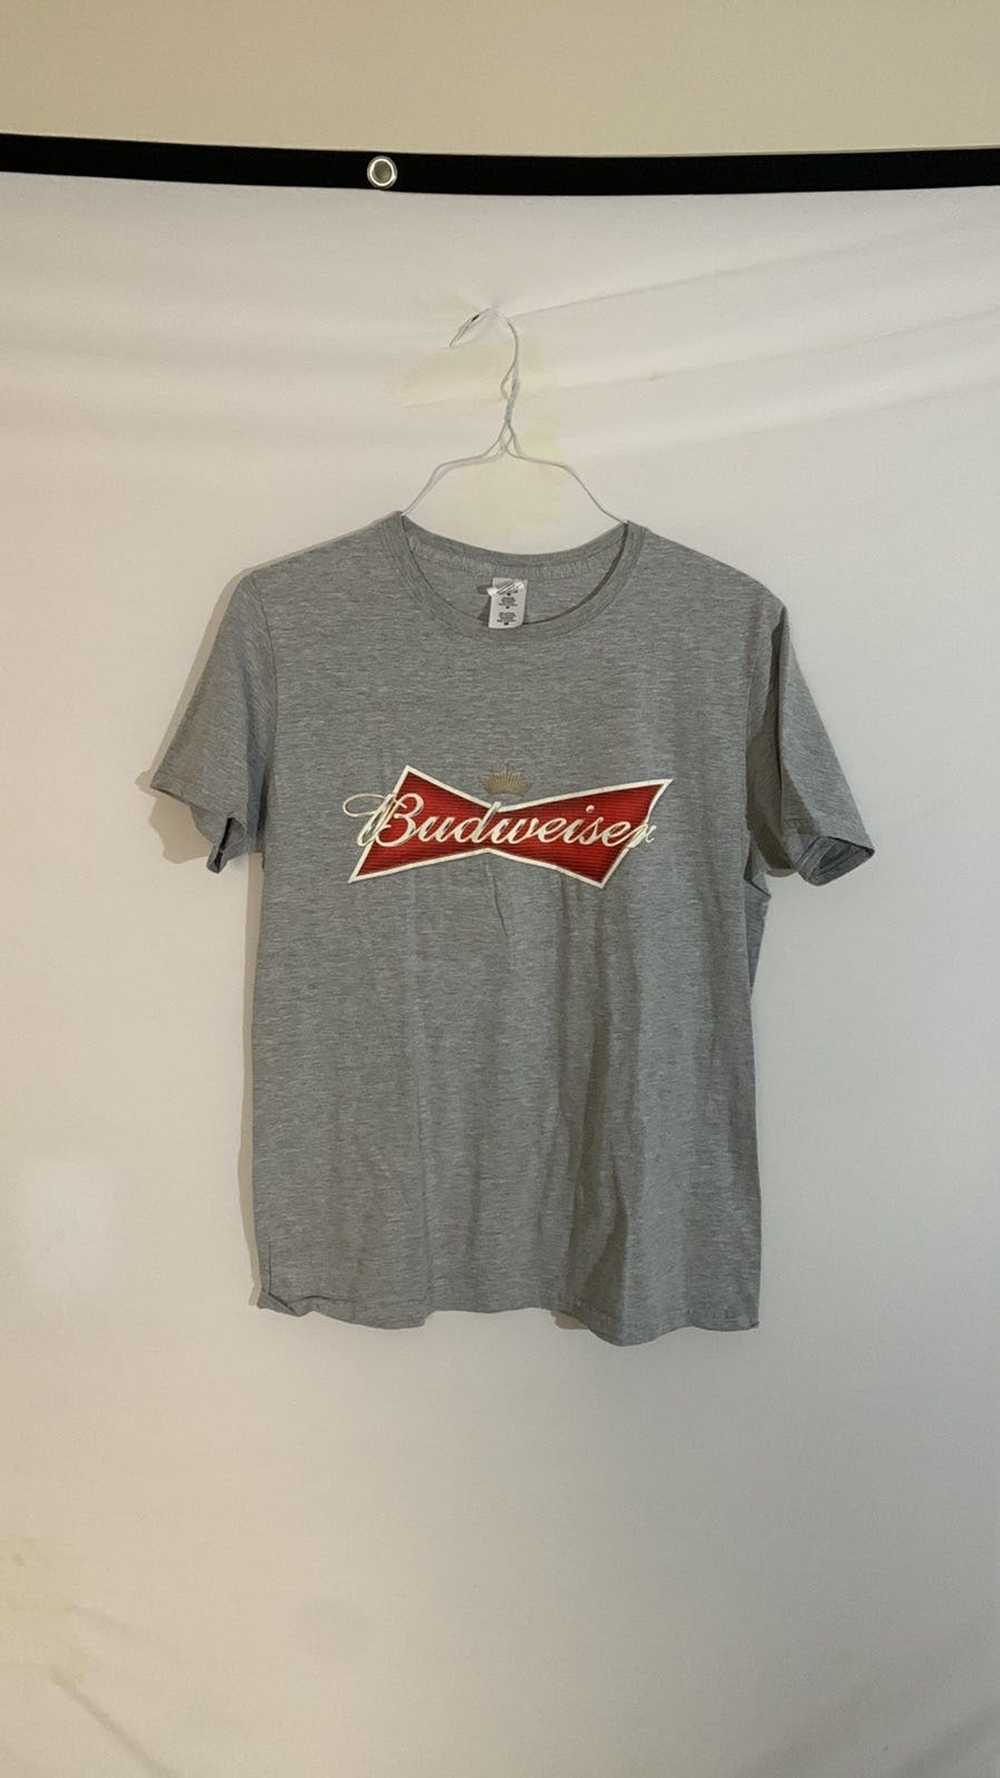 Budweiser Clean vintage Budweiser t shirt - image 1